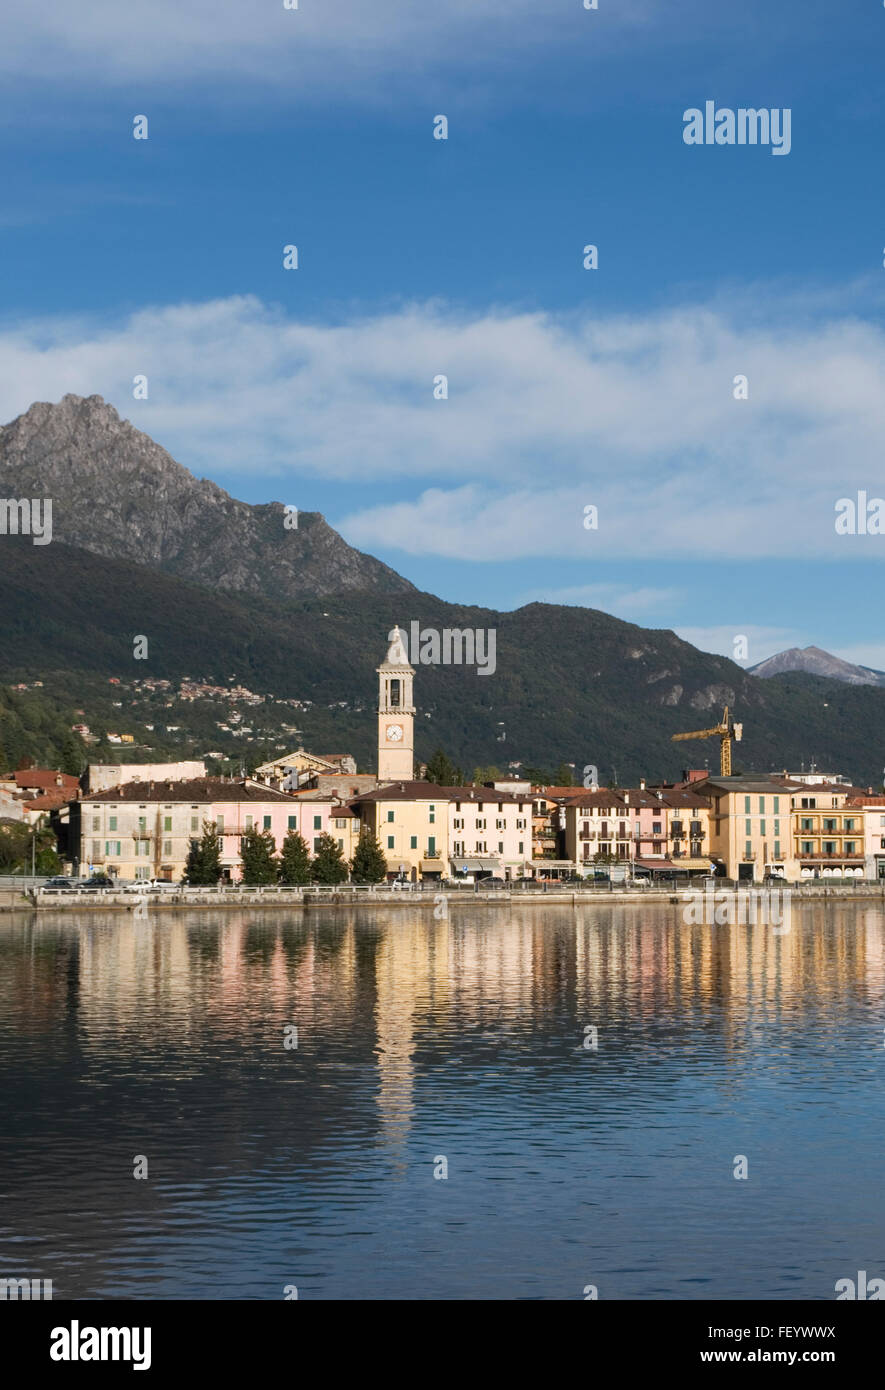 the town of Porlezza at Lake Lugano, Lombardia, Italy Stock Photo